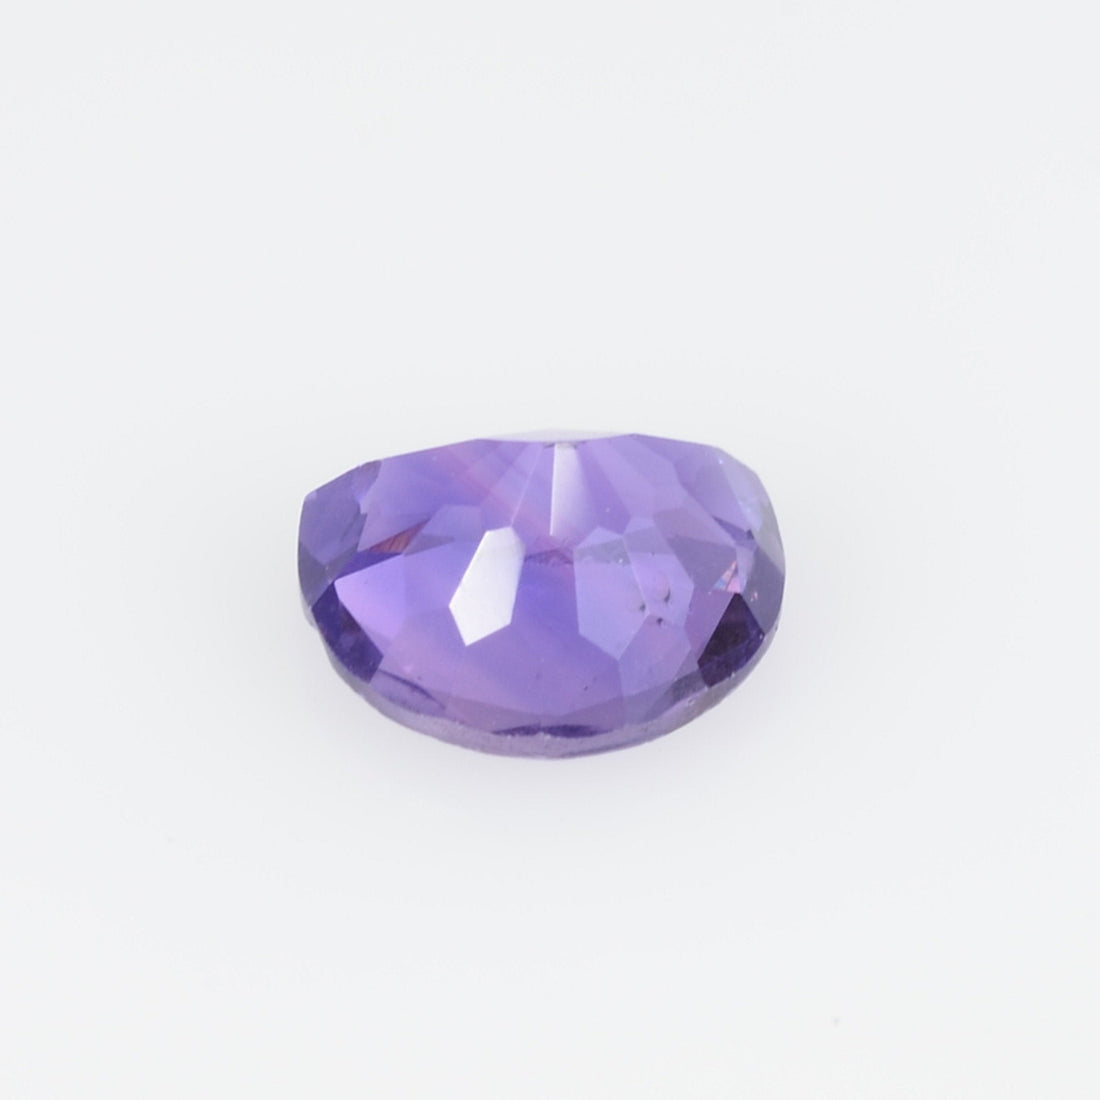 0.64 Cts Natural Lavender Sapphire Loose Gemstone Fancy Half Moon Cut - Thai Gems Export Ltd.